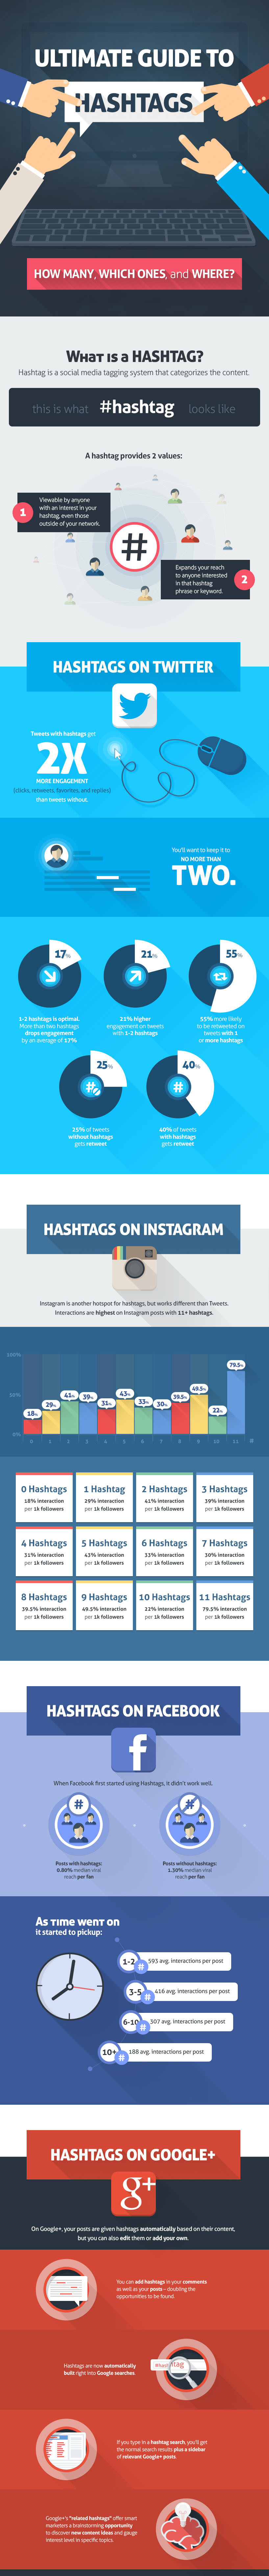 utilizarea-hashtaguri-hastag-social-media-instagram-twitter